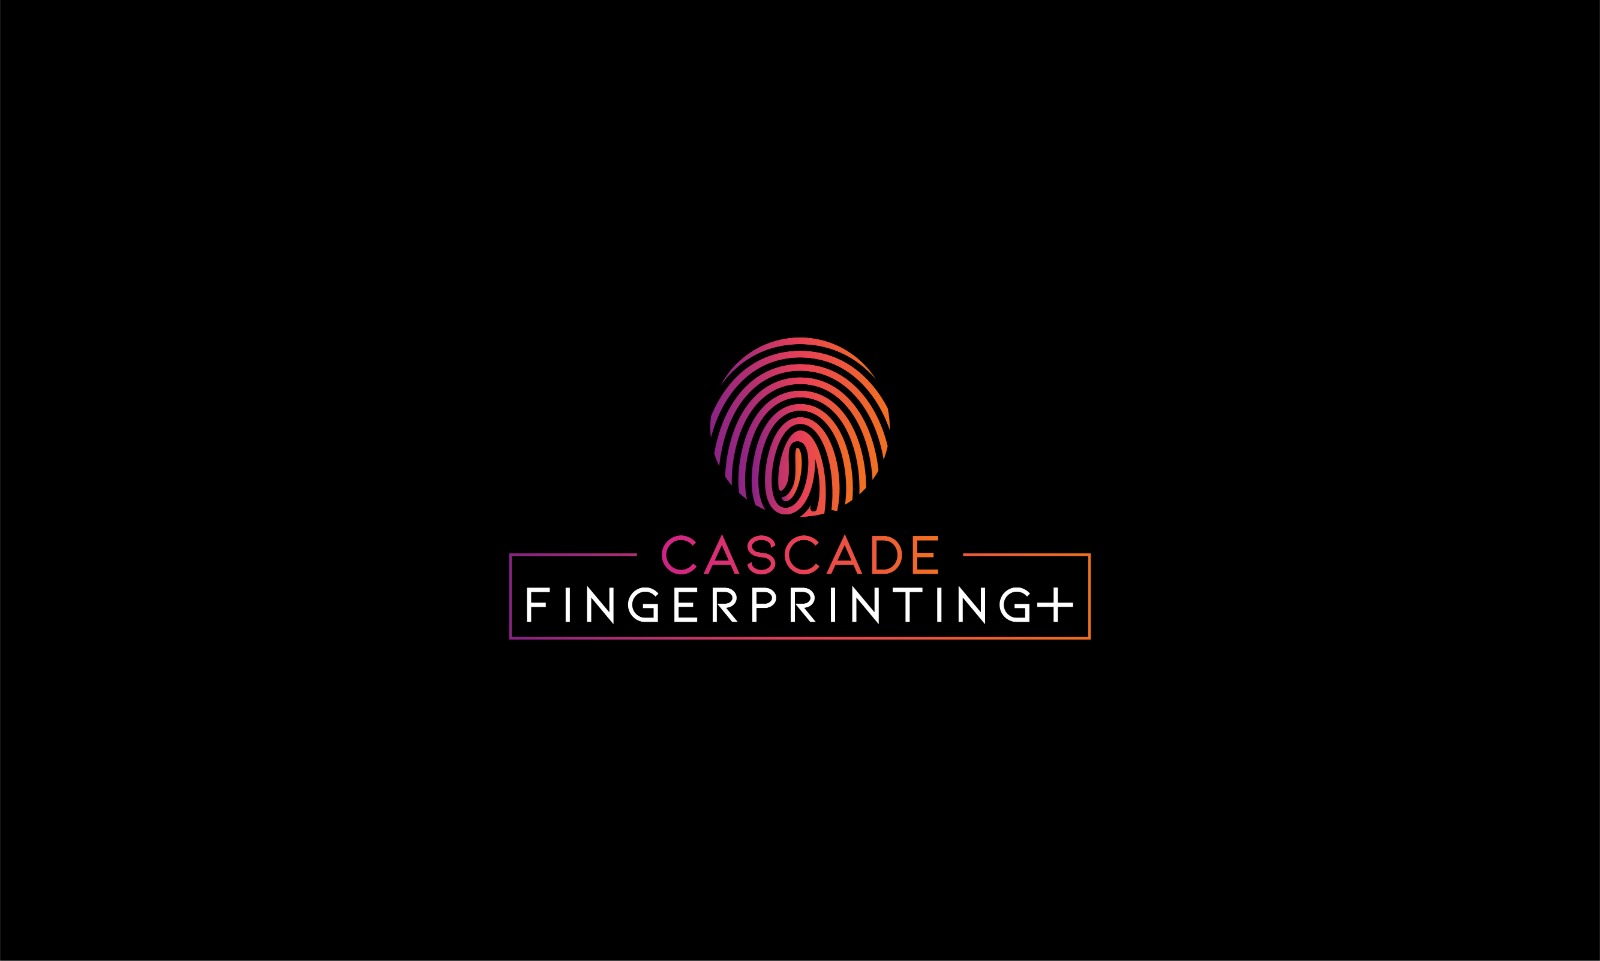 Business logo of Cascade Fingerprinting+